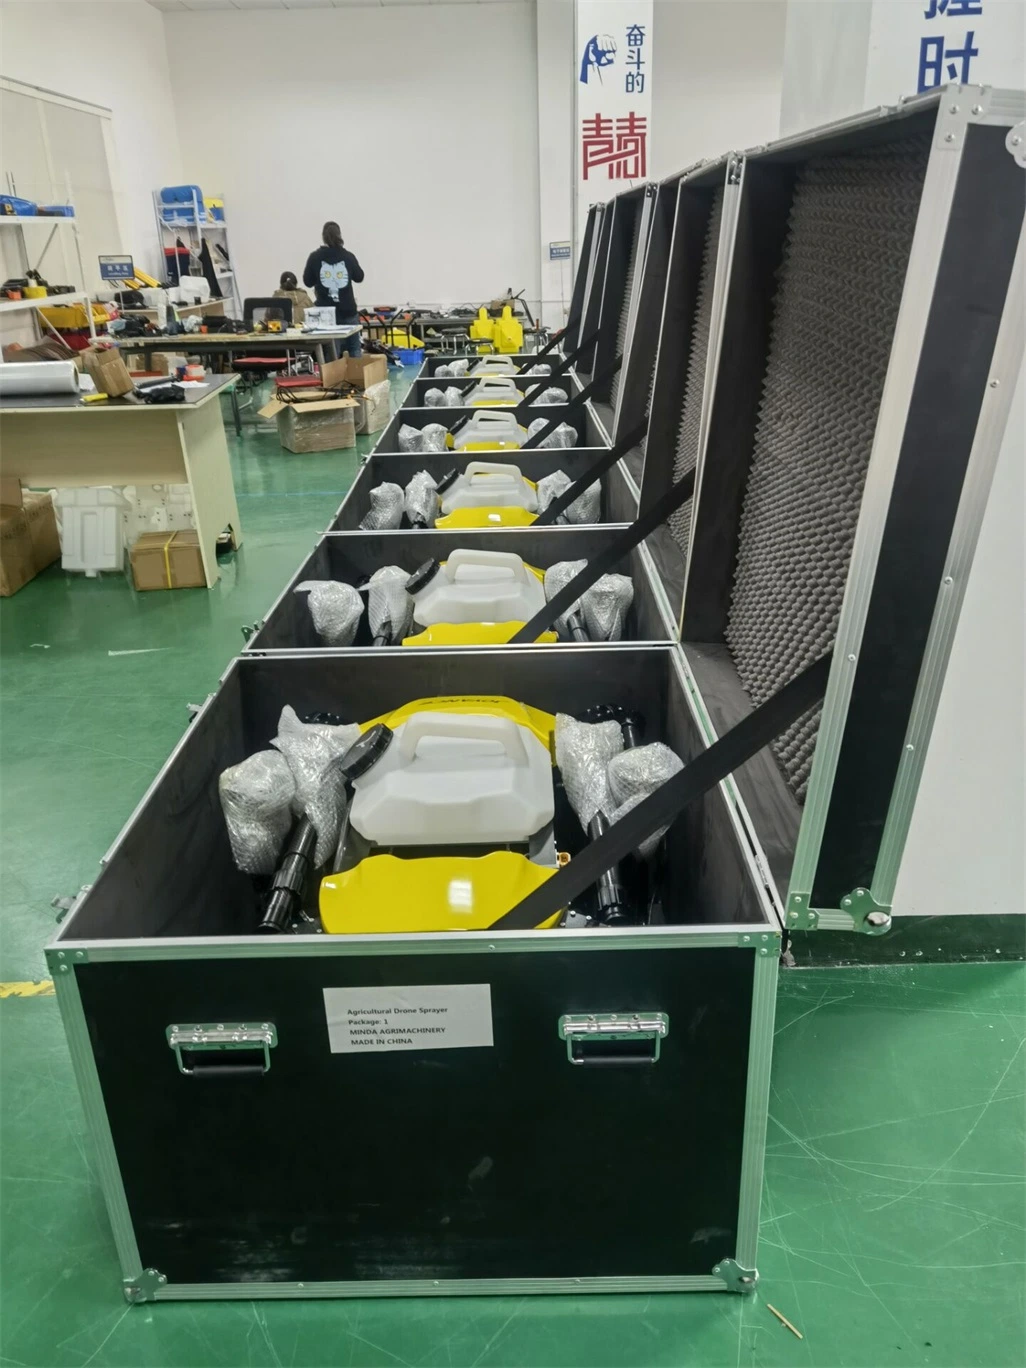 Joyance Factory Agriculture Drone 30 Liter Plant Uav Manufacturer Smiliar to Xag